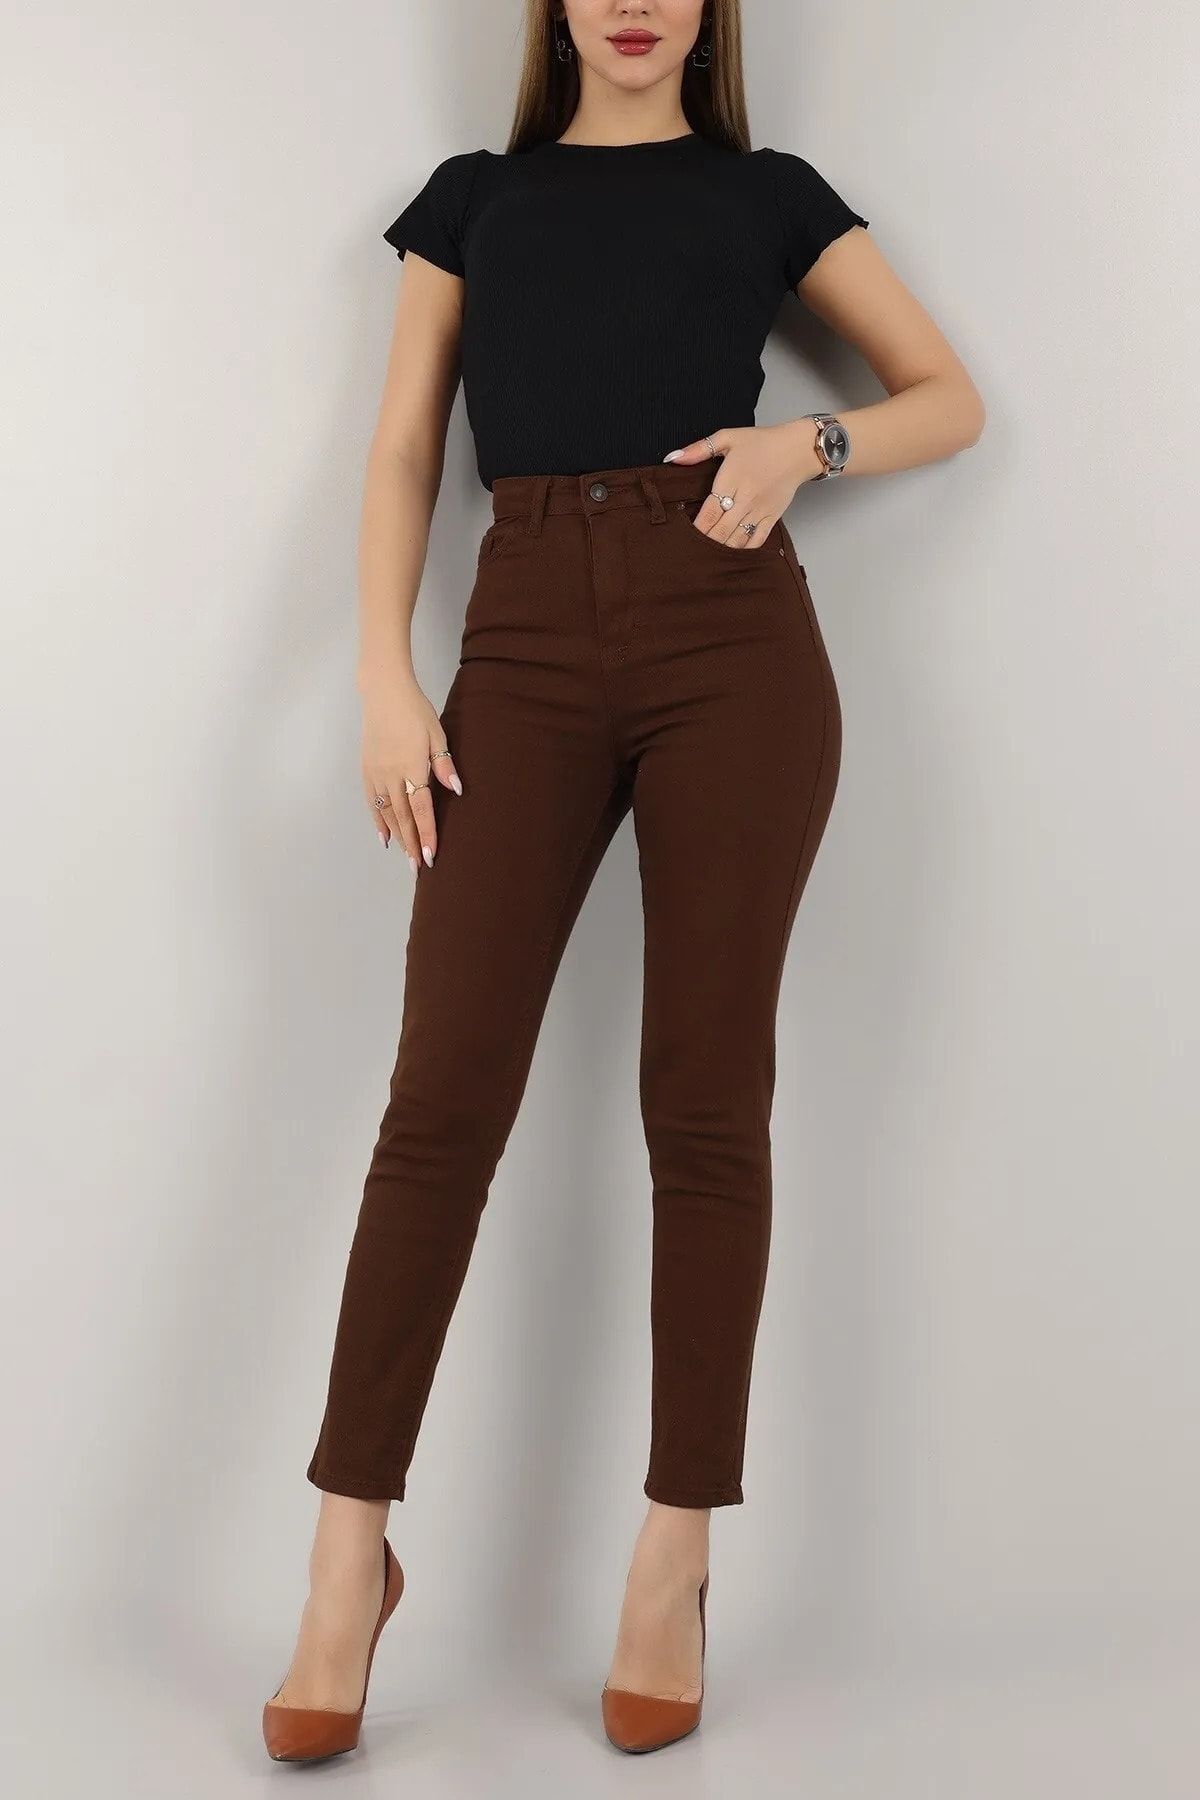 MAKRAS EXCLUSIVE Maria Kadın Koyu Kahverengi Süper Yüksek Bel Comfort Likralı Mom Kot Pantalon Jeans